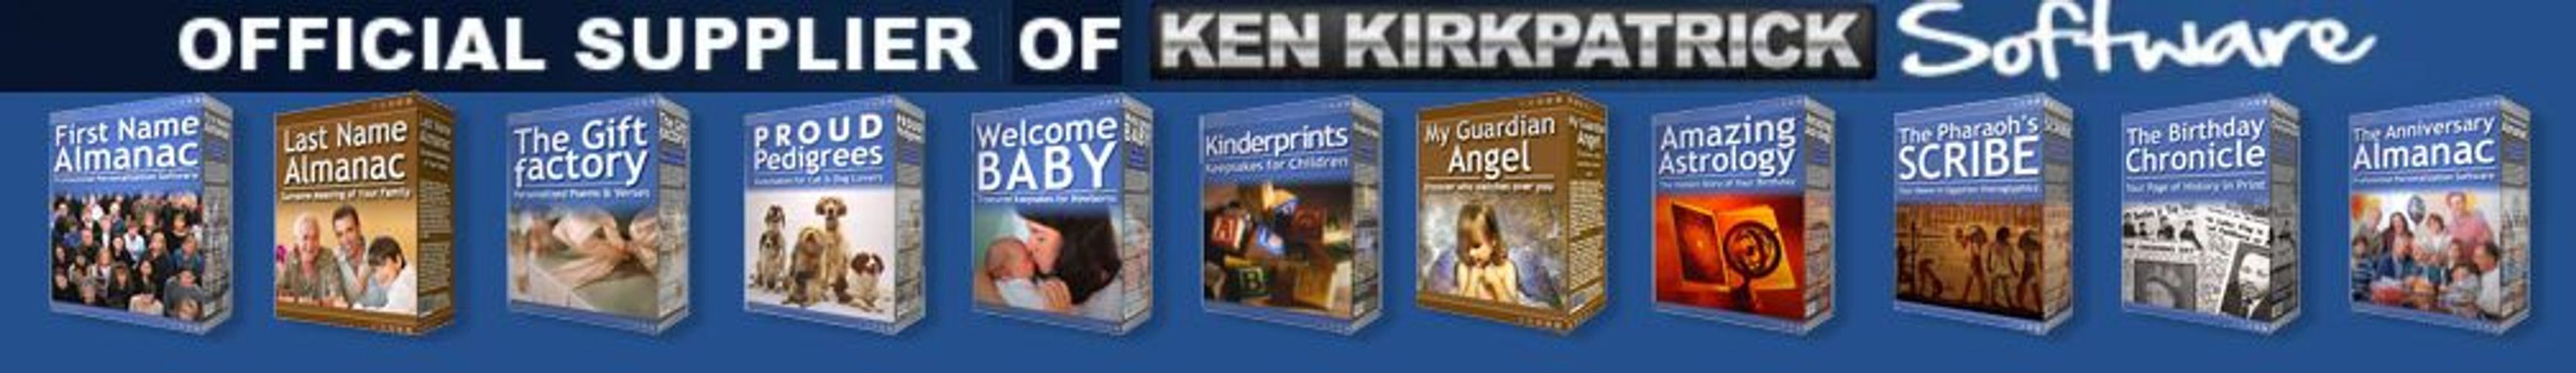 official supplier for Ken Kirkpatrick Software